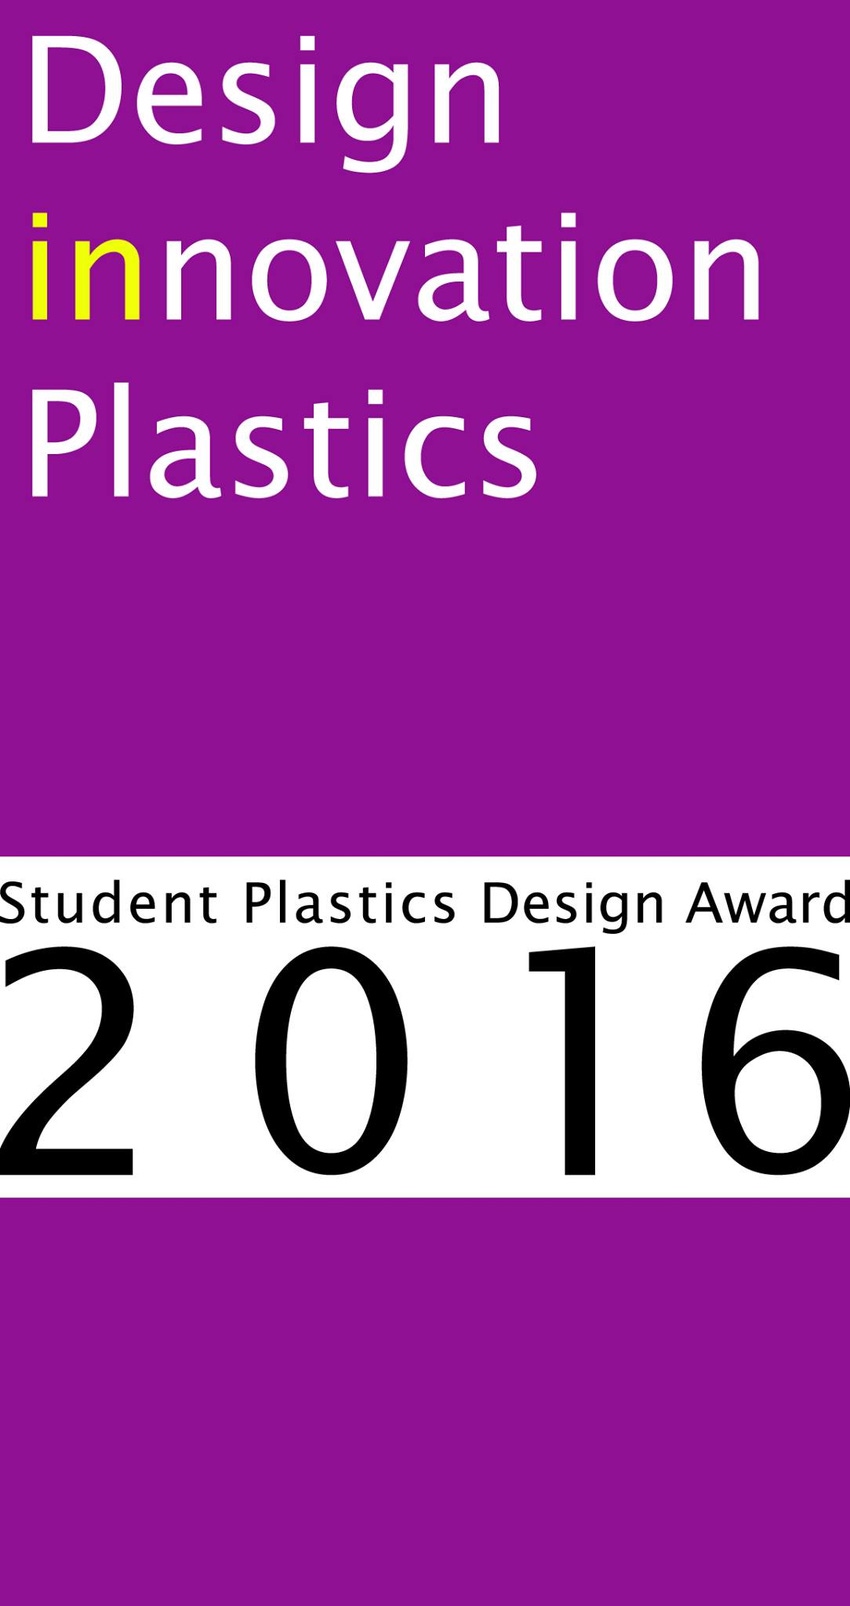 Design Innovation in Plastics: 2016 award winner announced